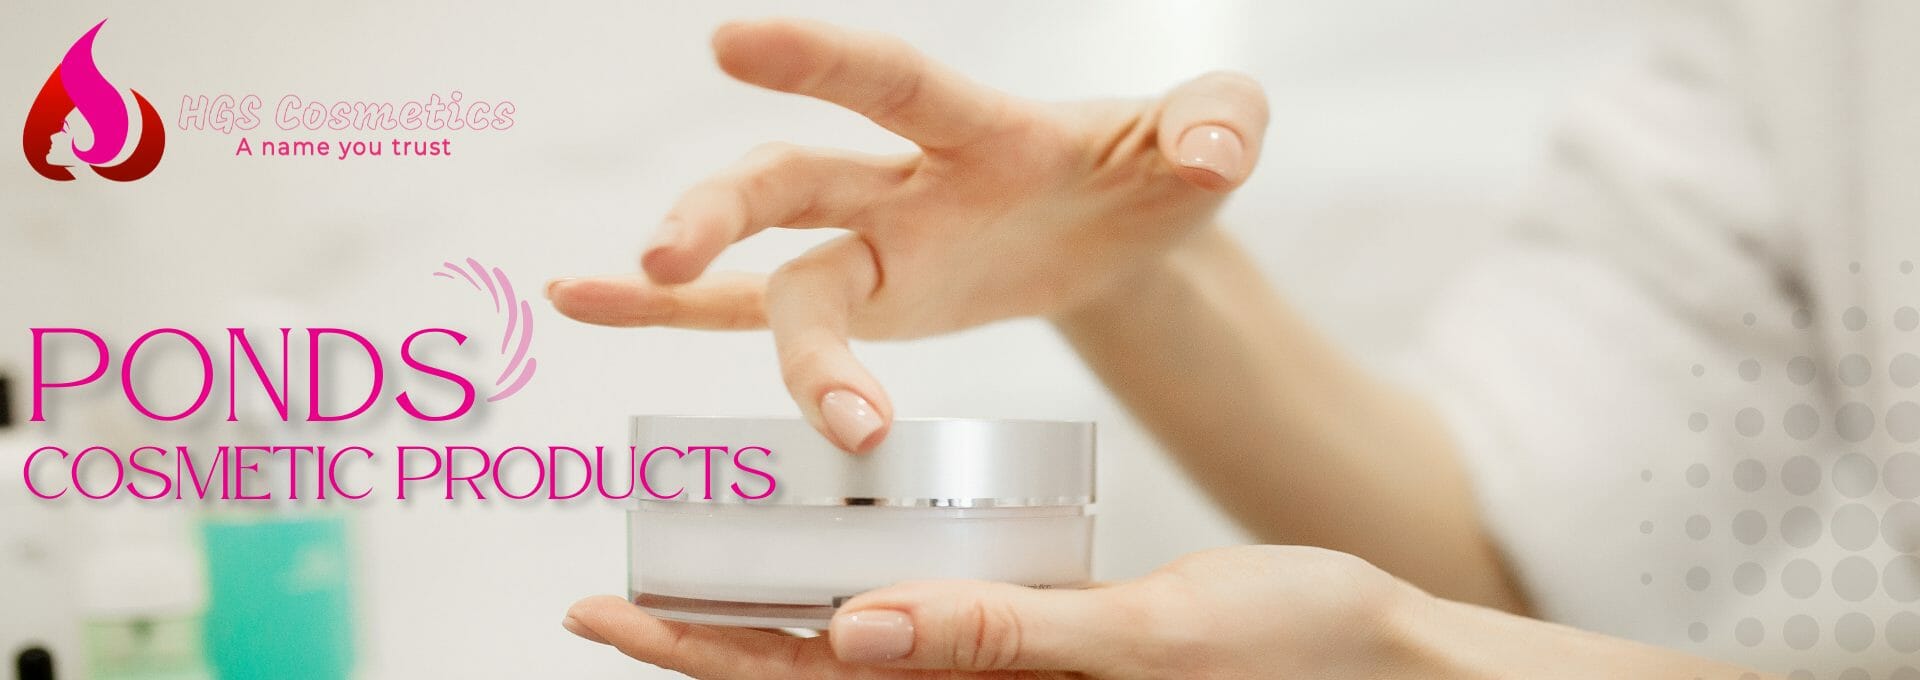 Buy Original Ponda's Products Online in Pakistan @ HGS Cosmetics